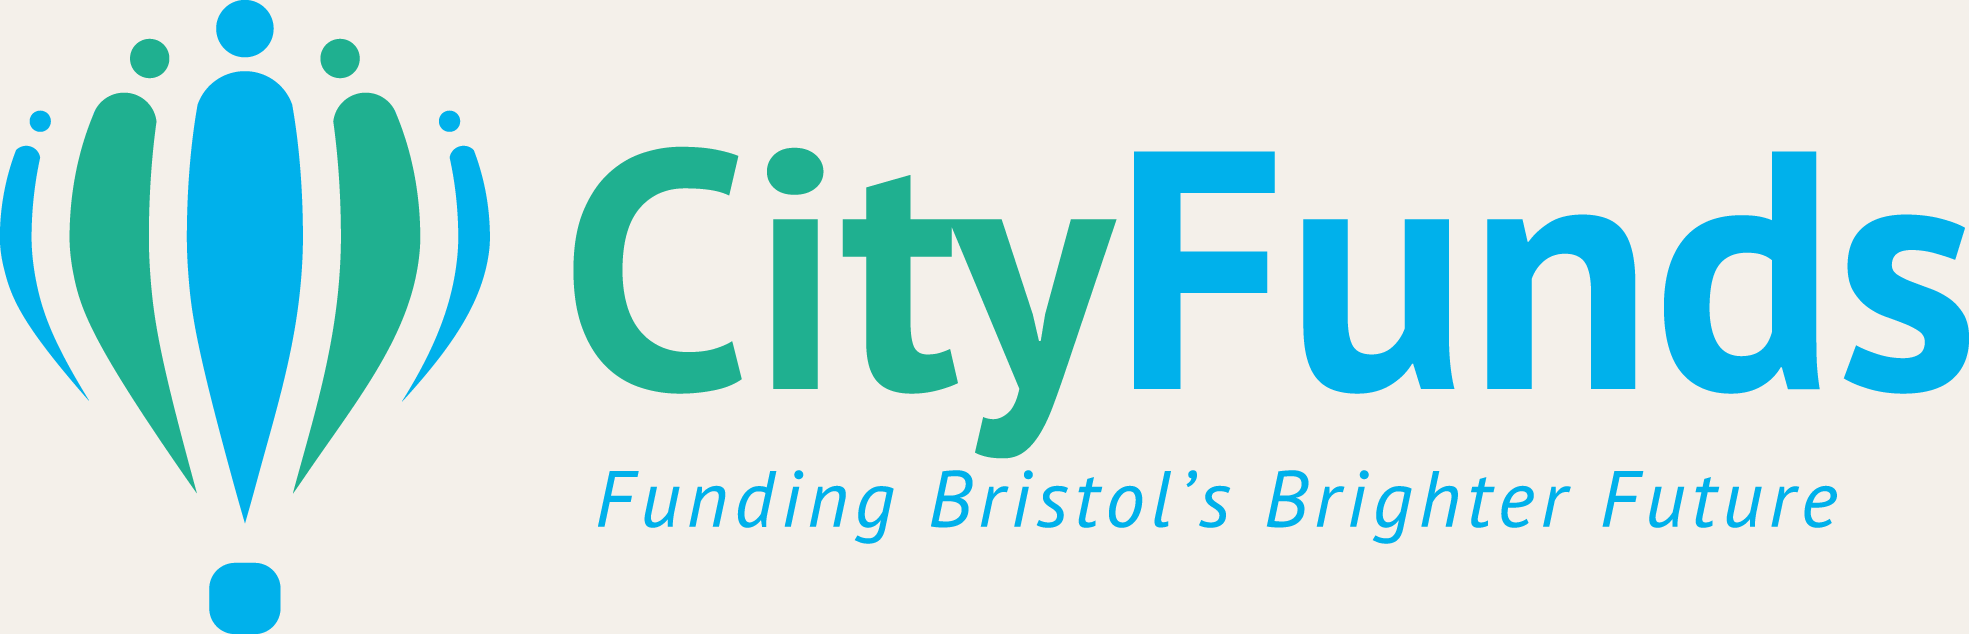 City Funds logo